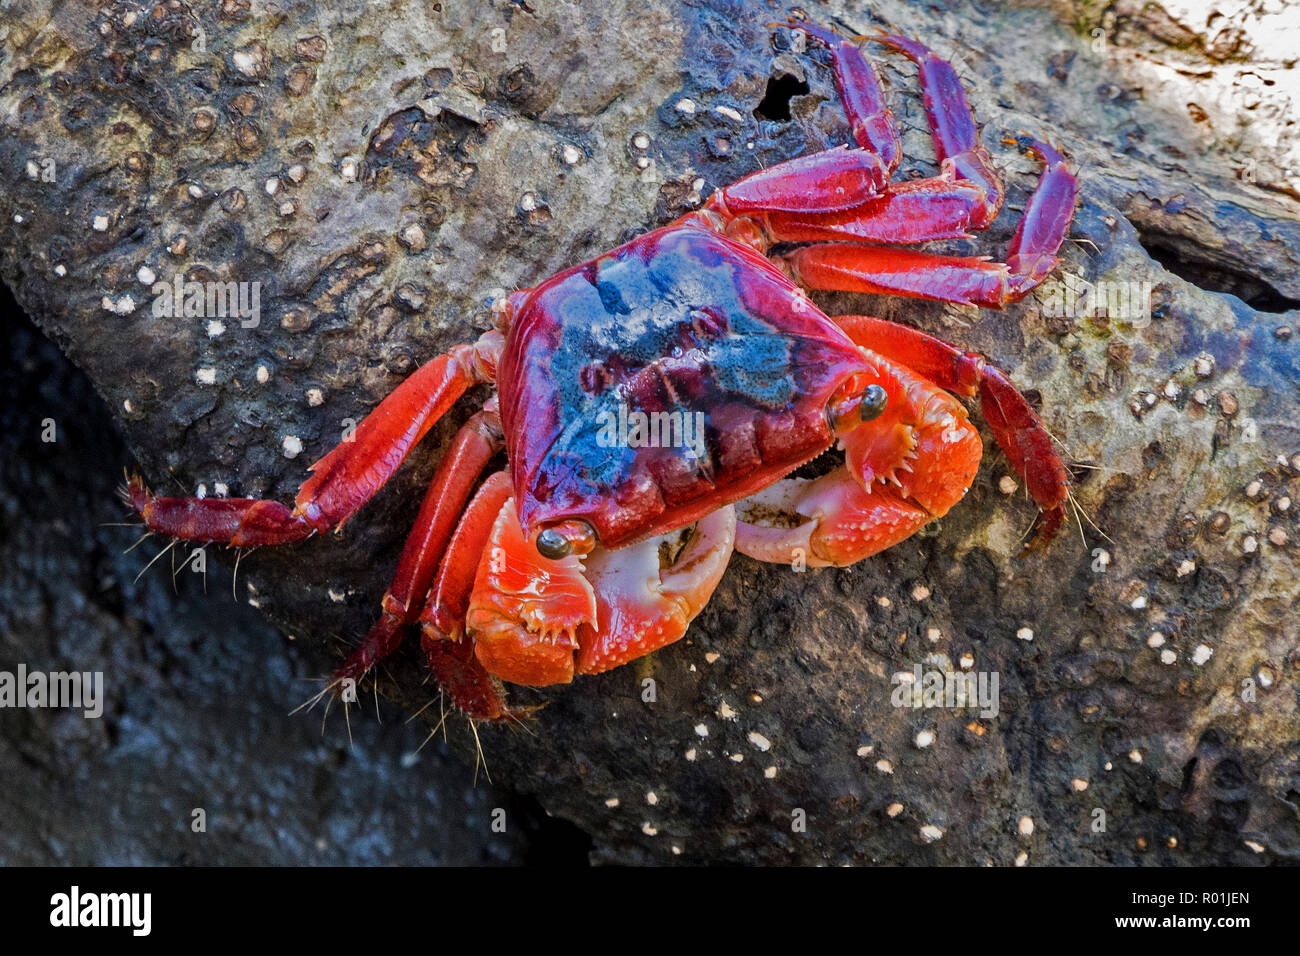 Mangrove crab found at Wynnum, brisbane Australia Stock Photo